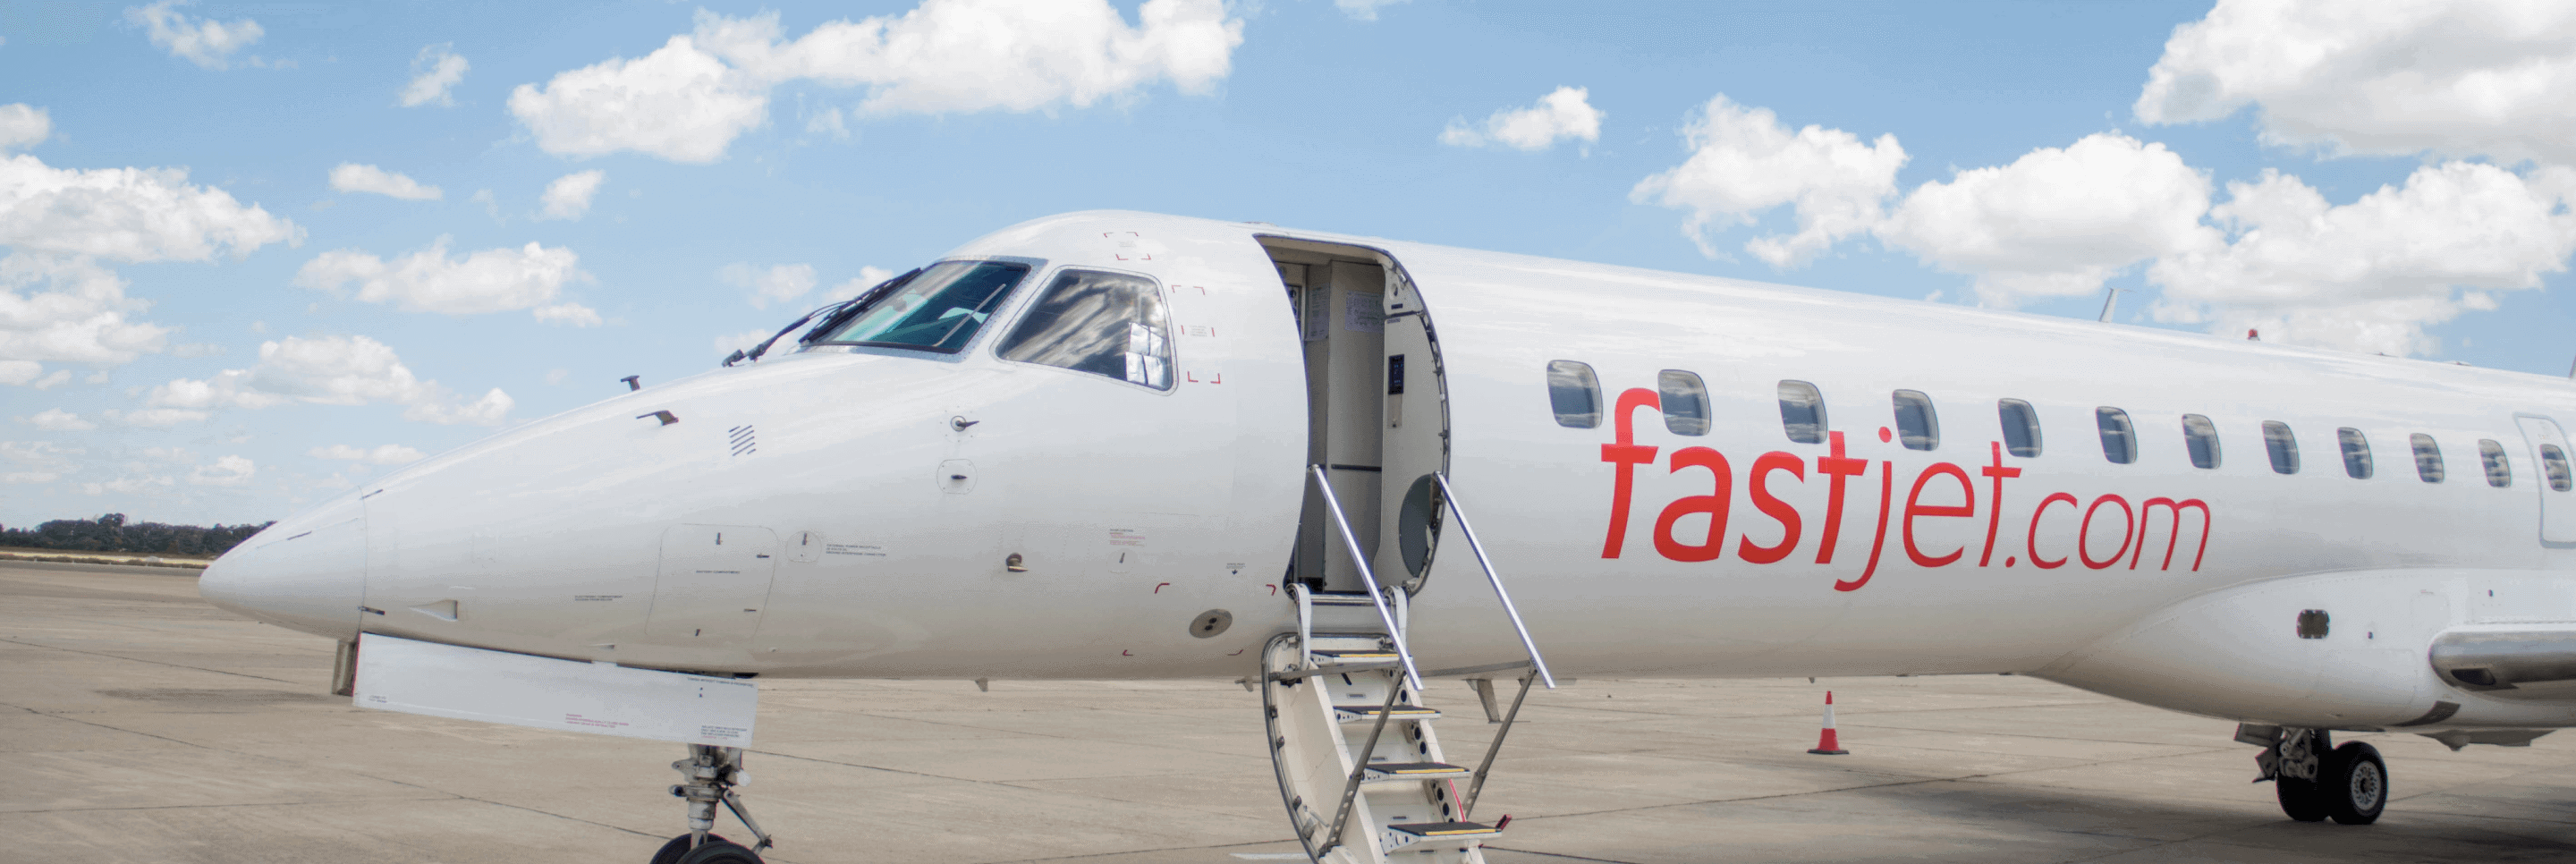 Fastjet upgrades Victoria Falls-Johannesburg flights to daily service